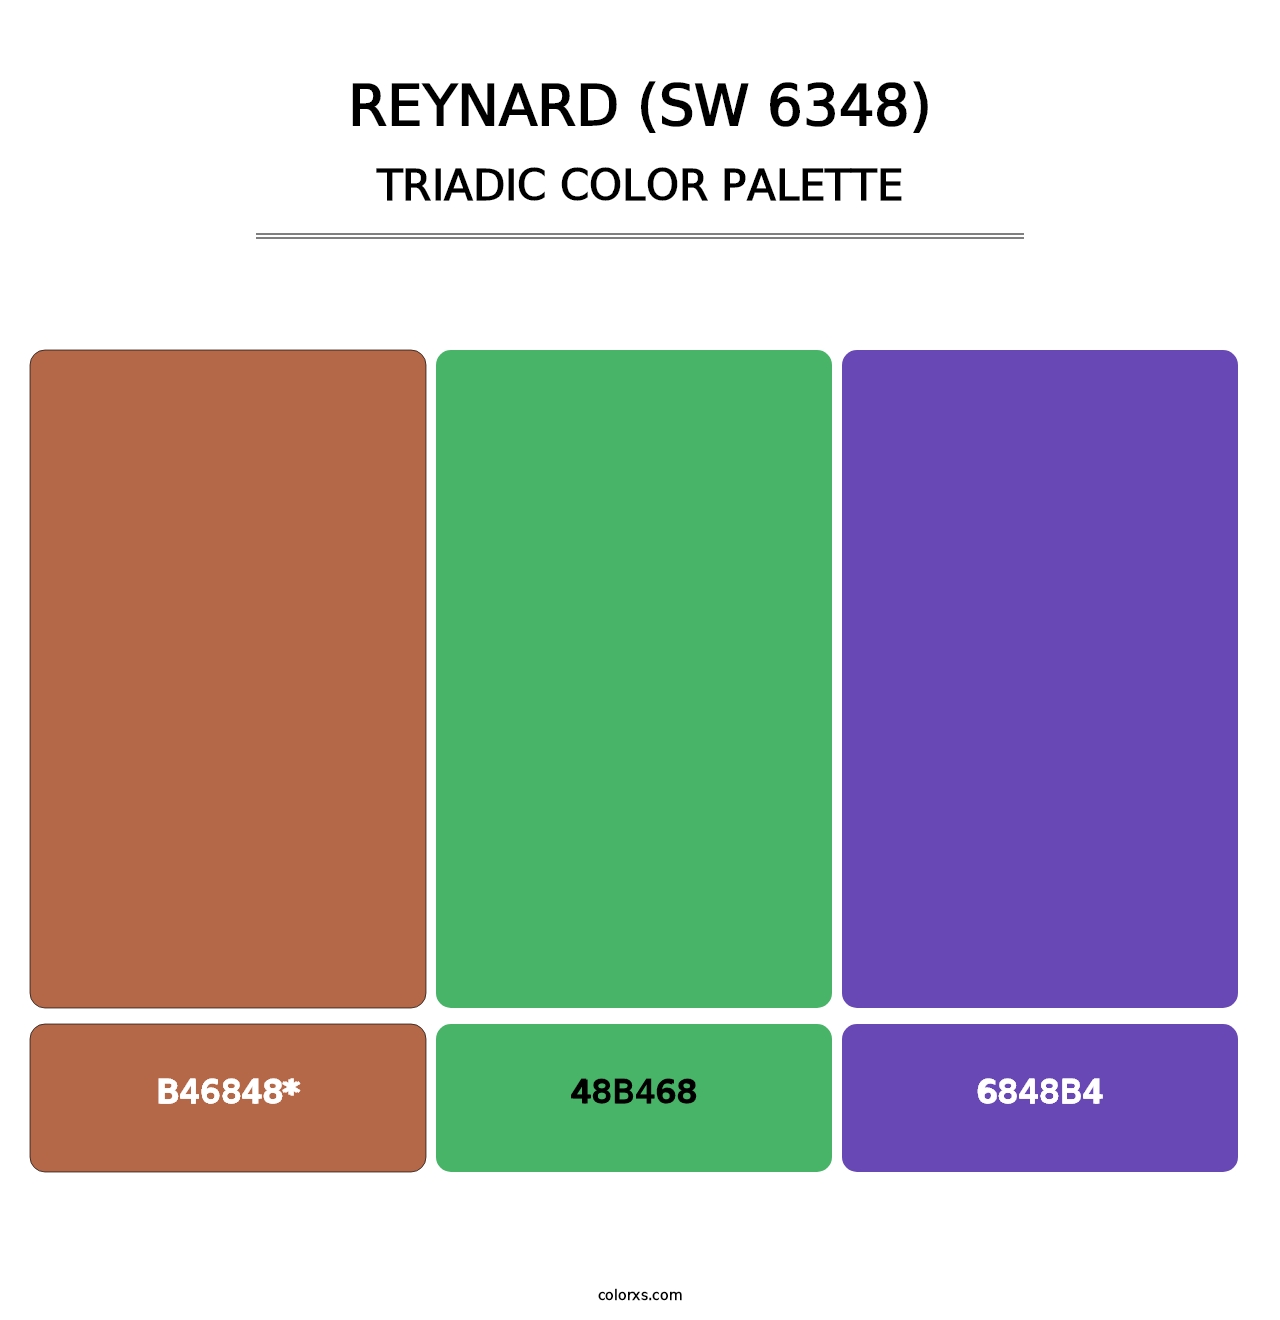 Reynard (SW 6348) - Triadic Color Palette